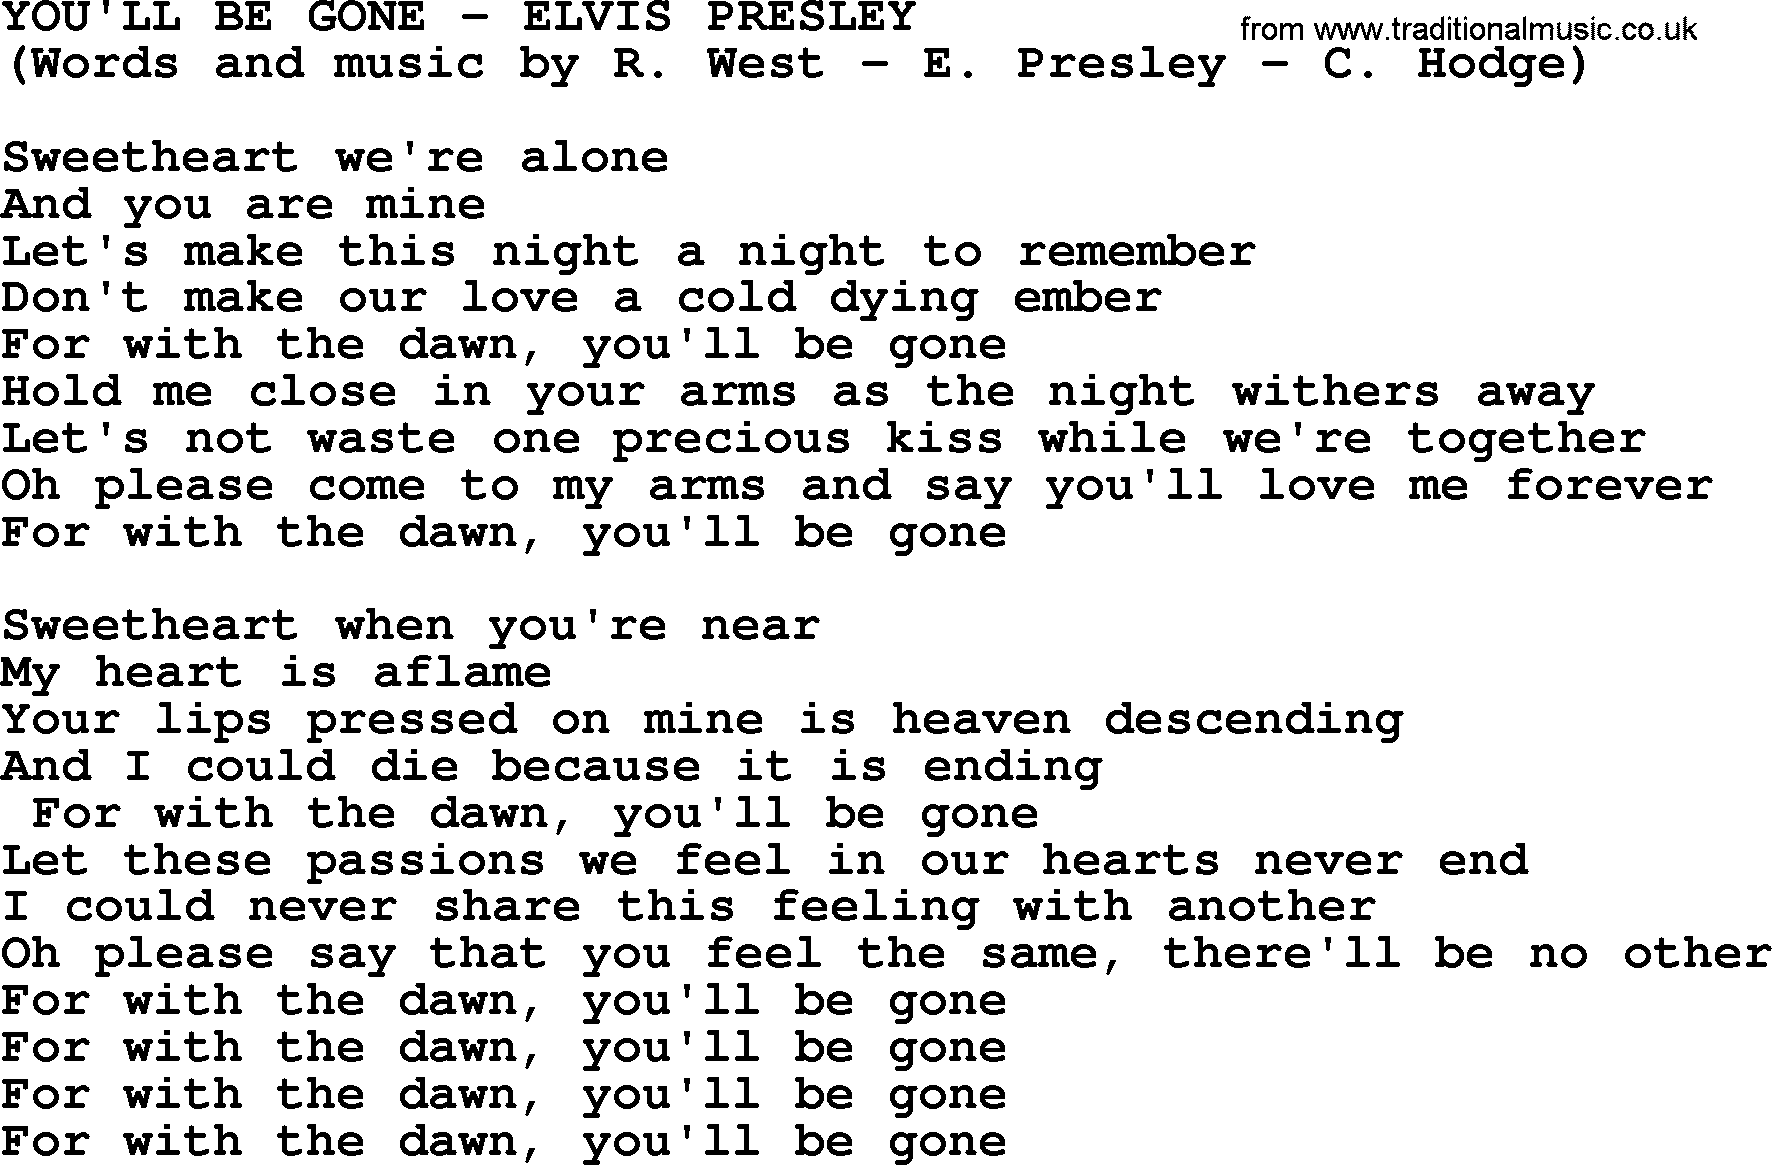 Elvis Presley song: You'll Be Gone lyrics